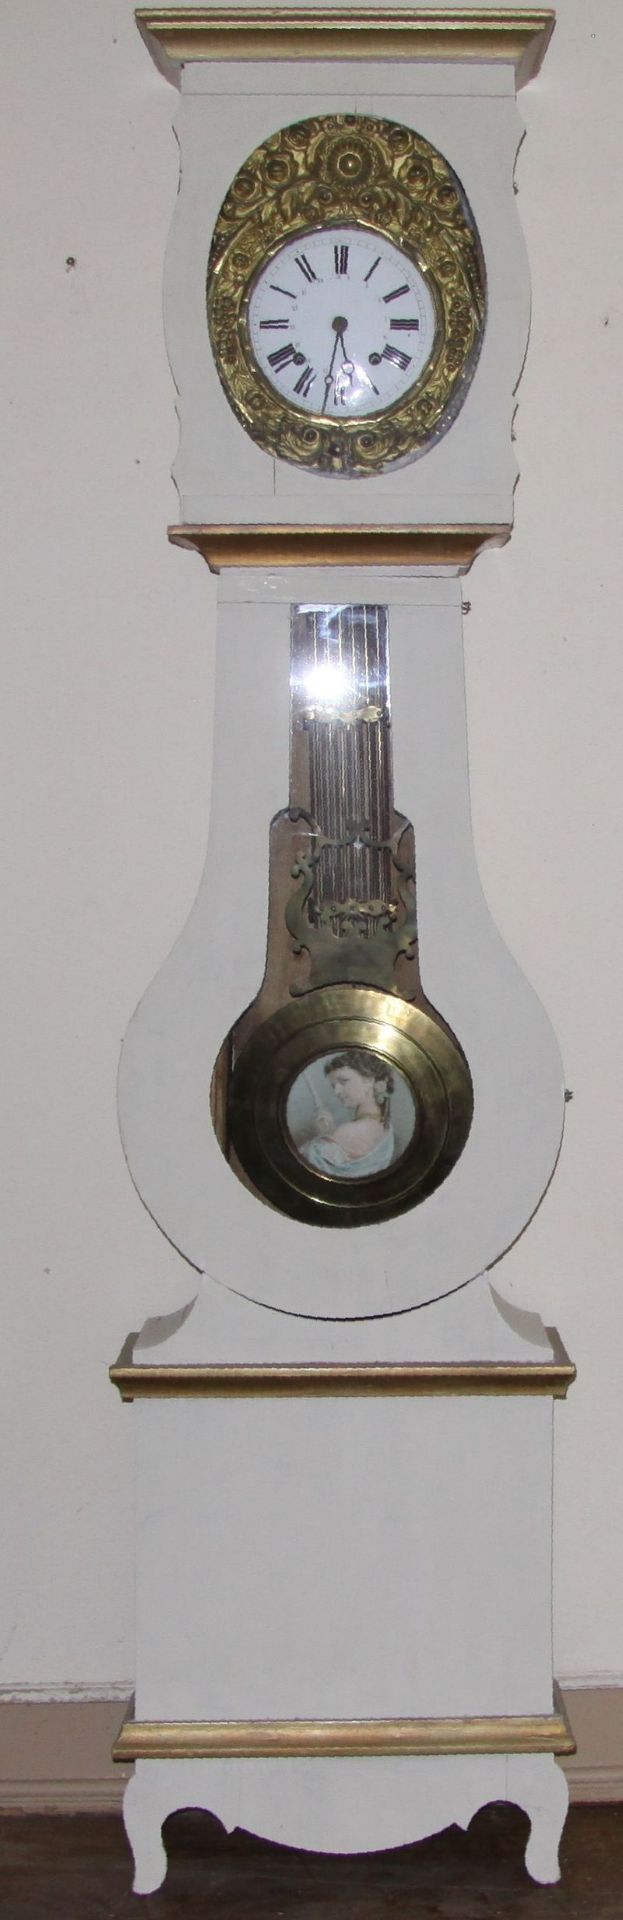 Bodenstanduhr, um 1850 Comtoise-Uhr. Weiß Gefasster Korpus, rechteckiger Sockel, violinförmiger